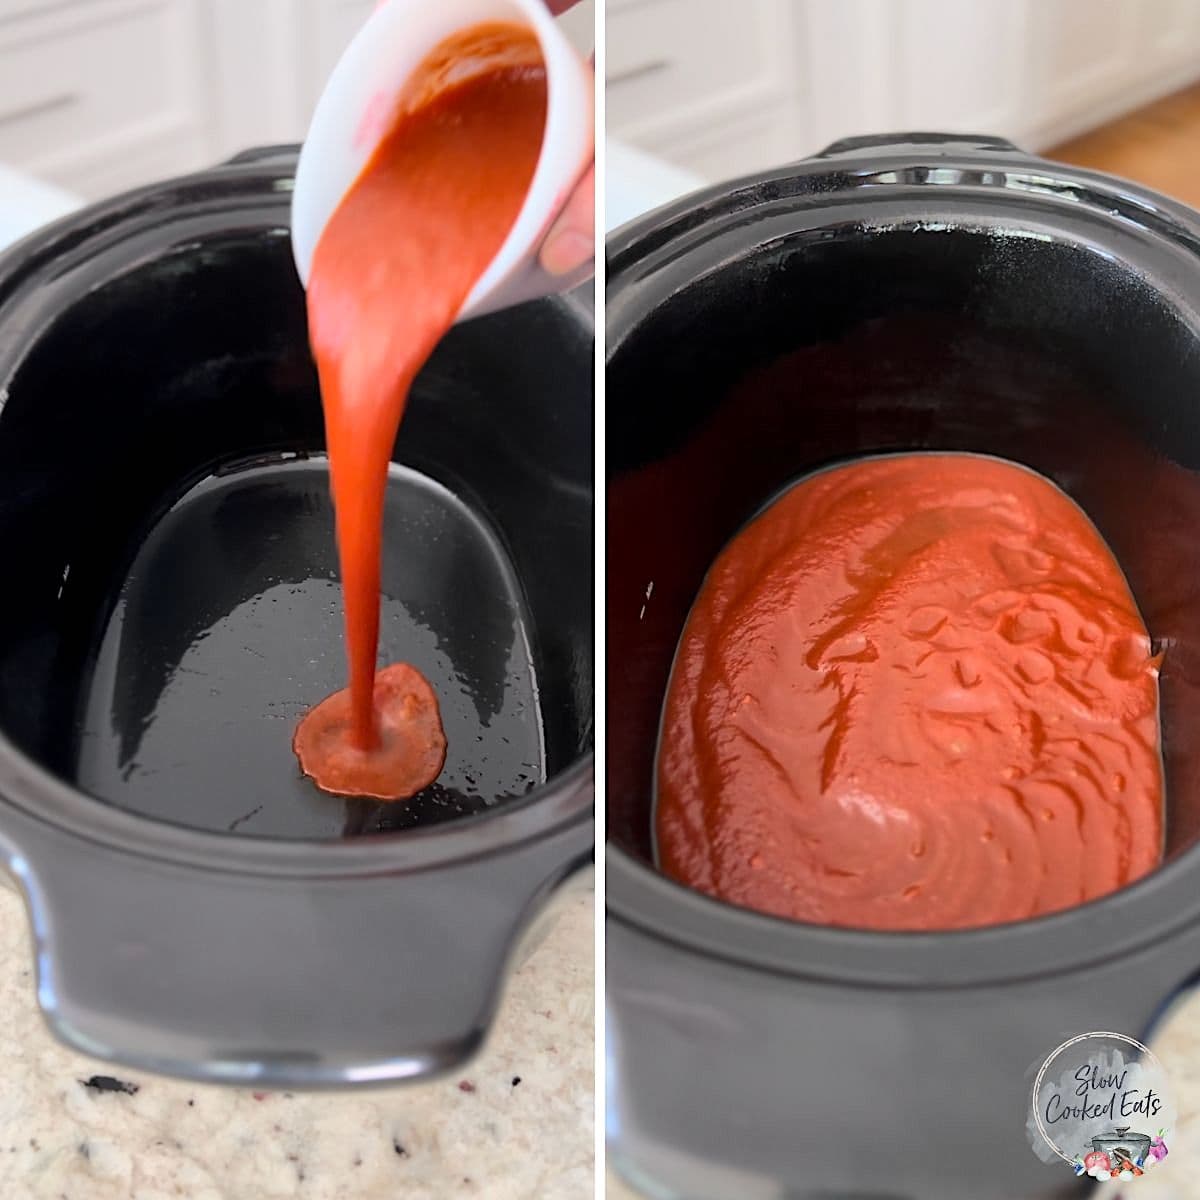 Pouring the marinara sauce into a black oval crockpot to make the ziti.